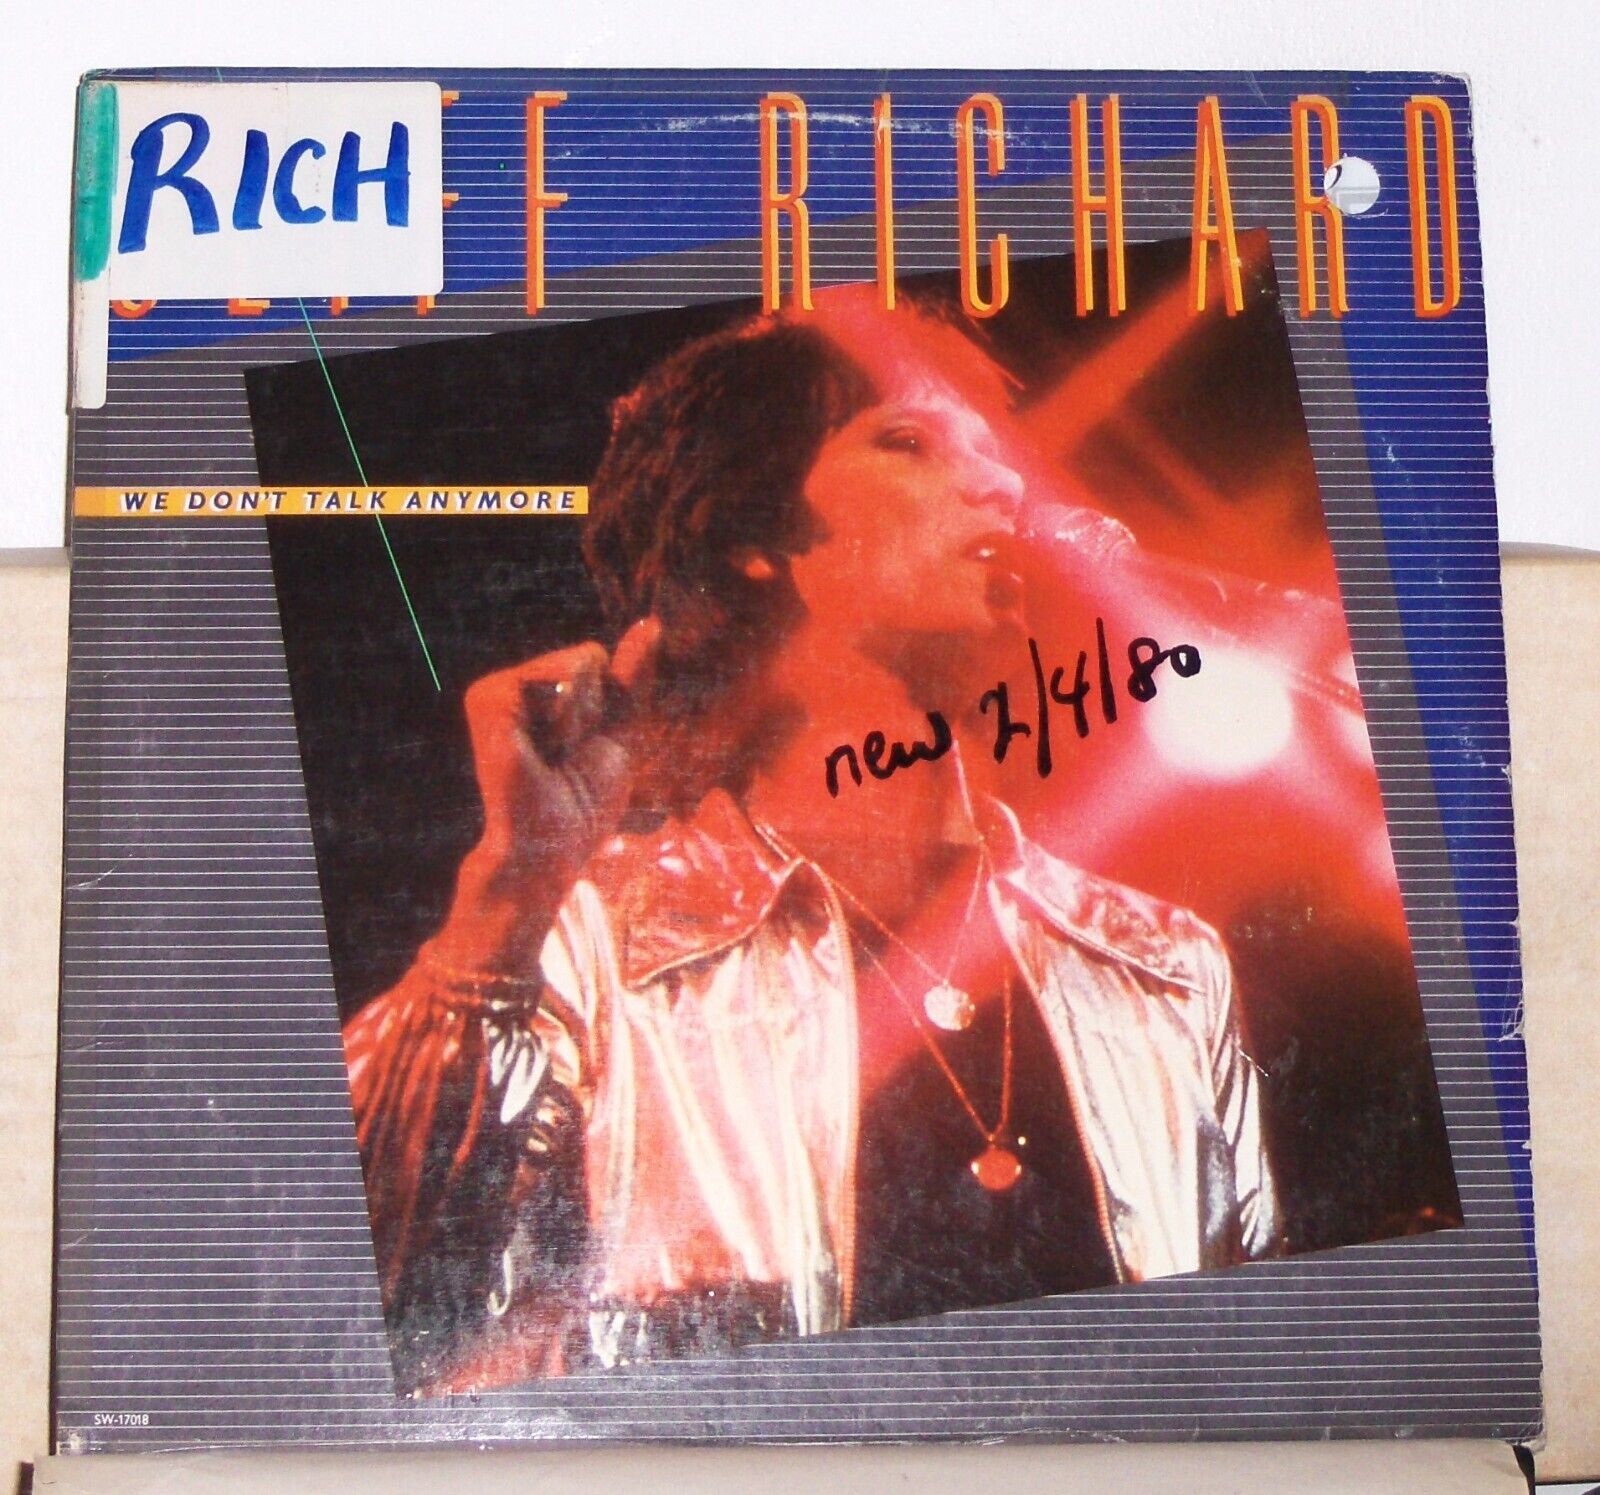 Cliff Richard – We Don't Talk Anymore - 1979 LP Record Album - Vinyl Excellent